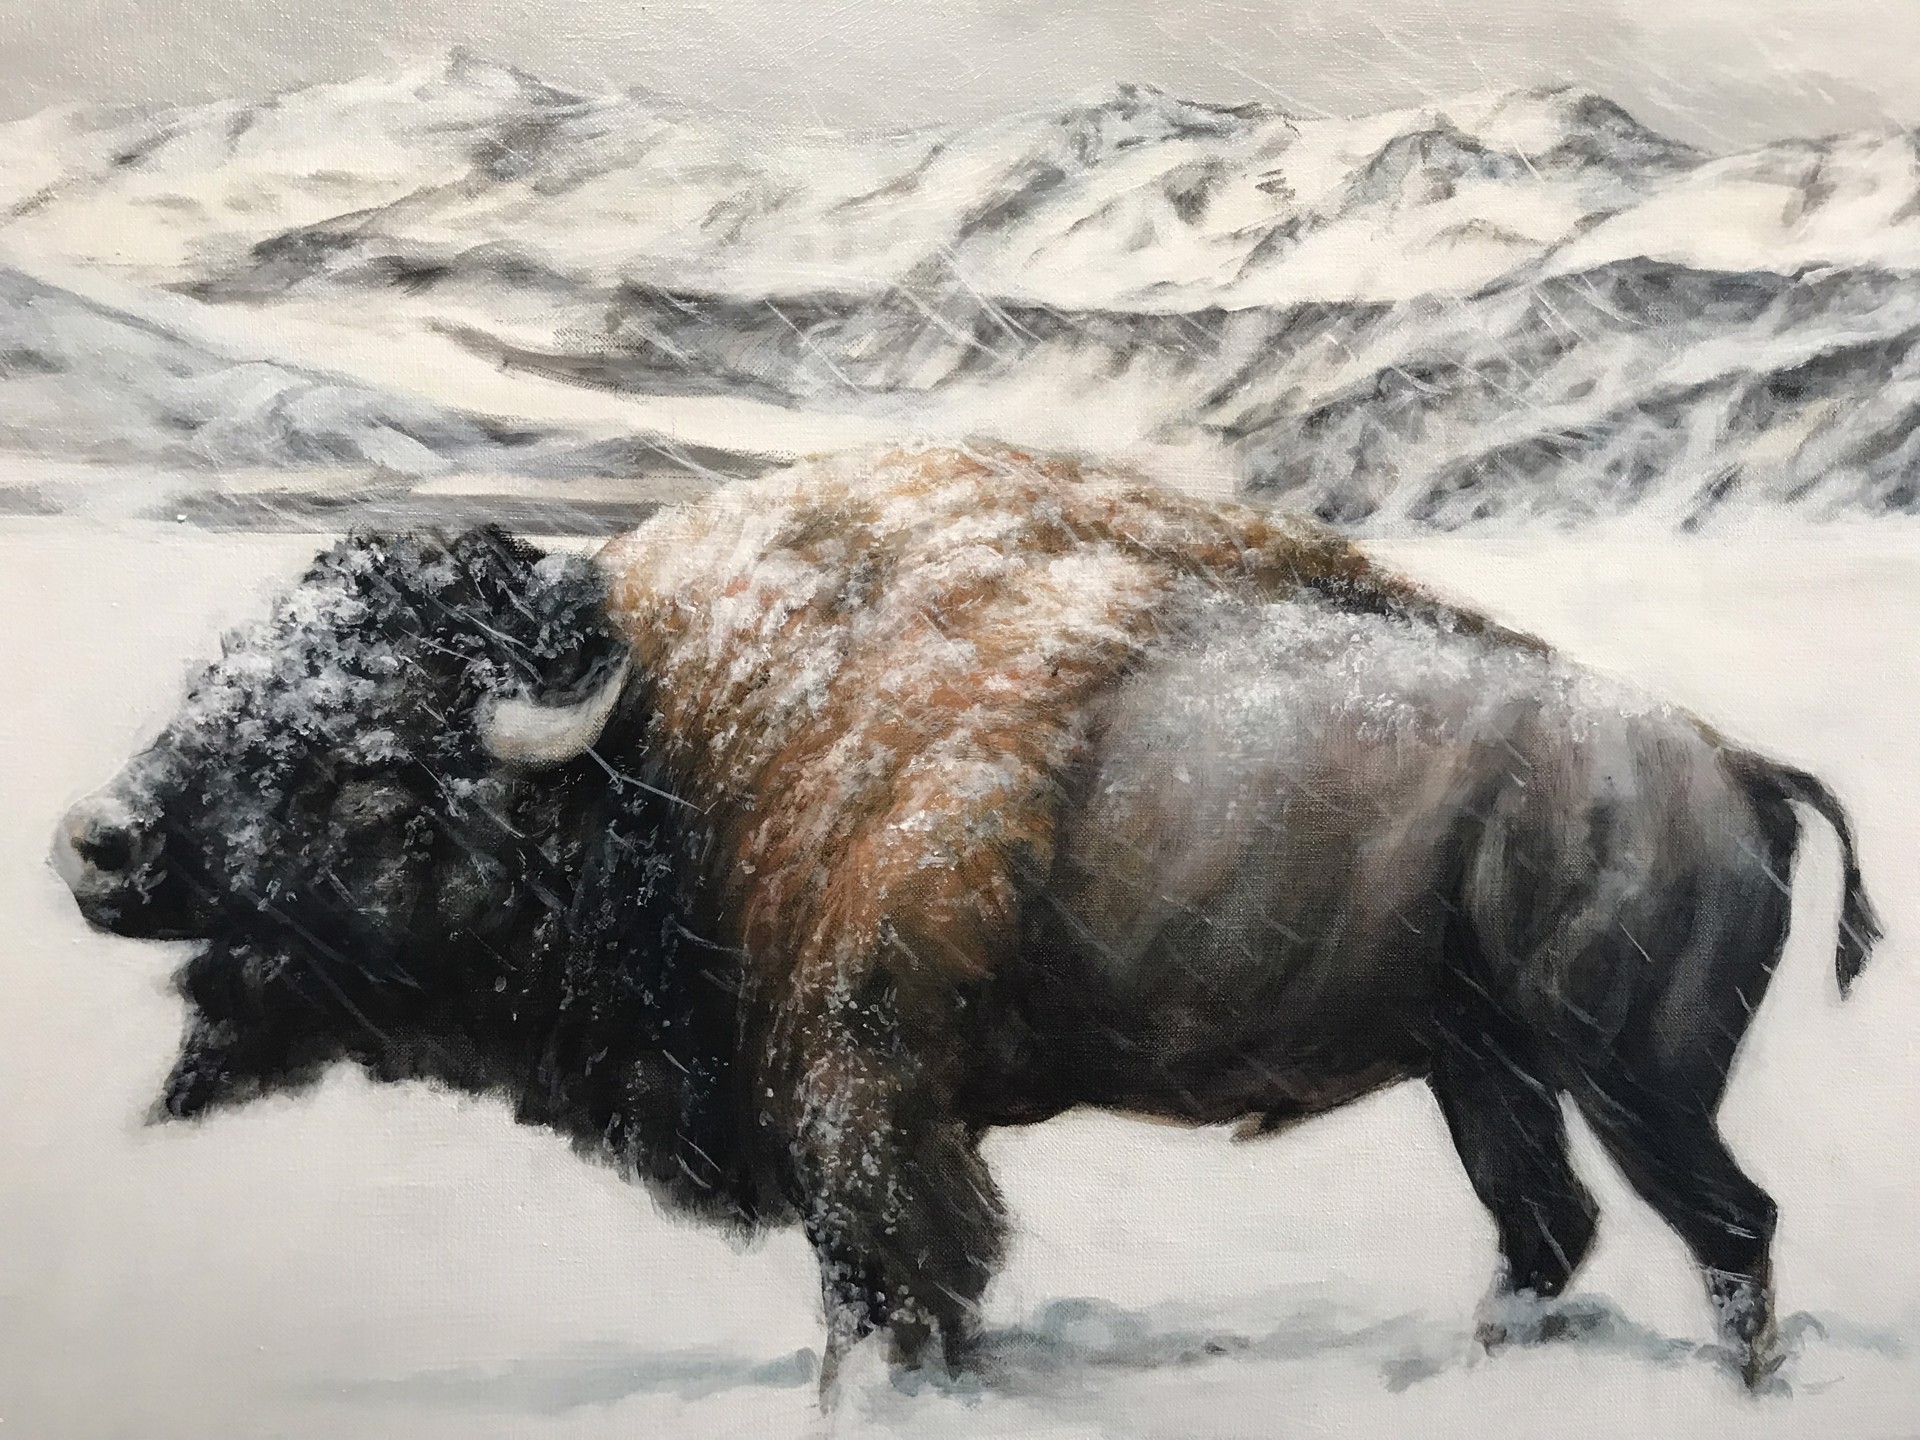 Bison Spring by Michael Brangoccio